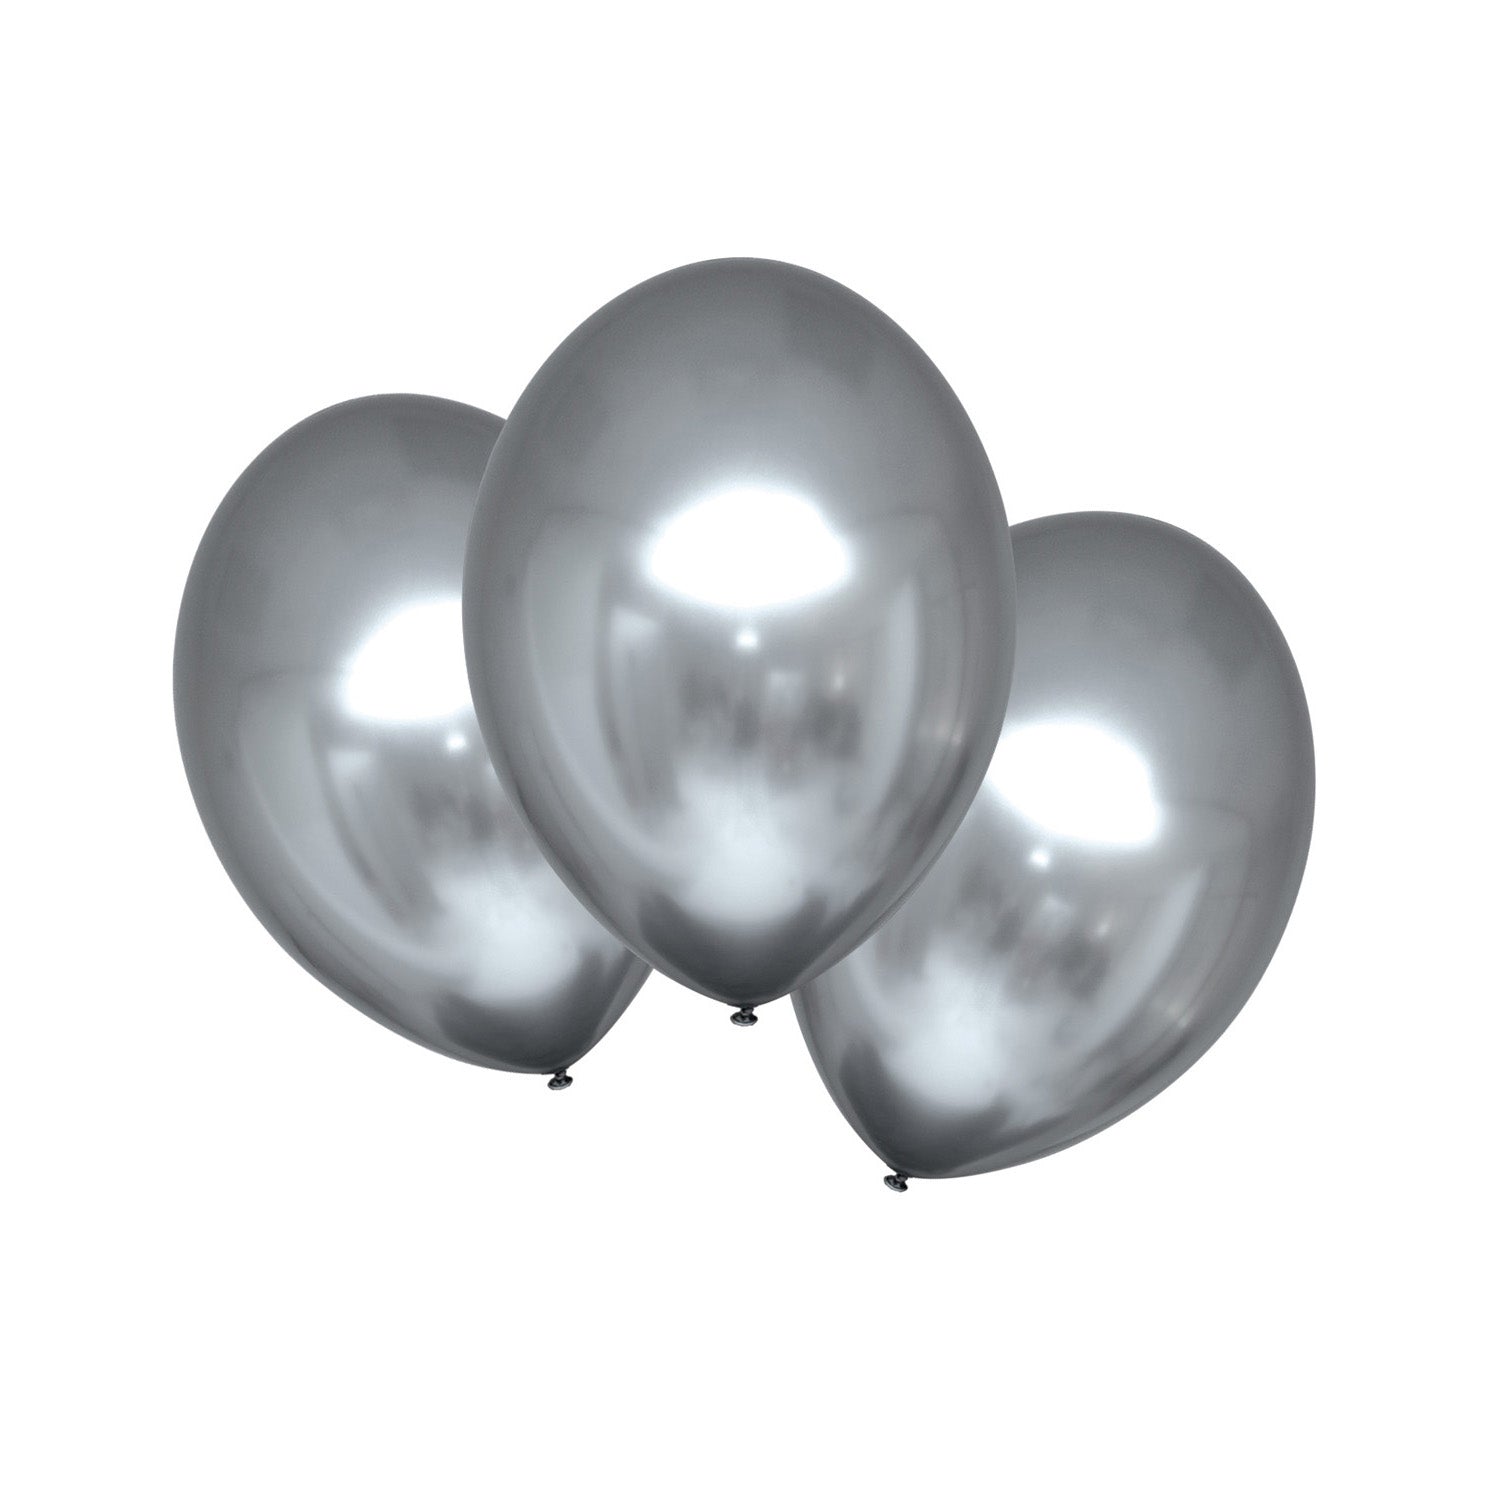 Chrome balloon silver 3 pcs